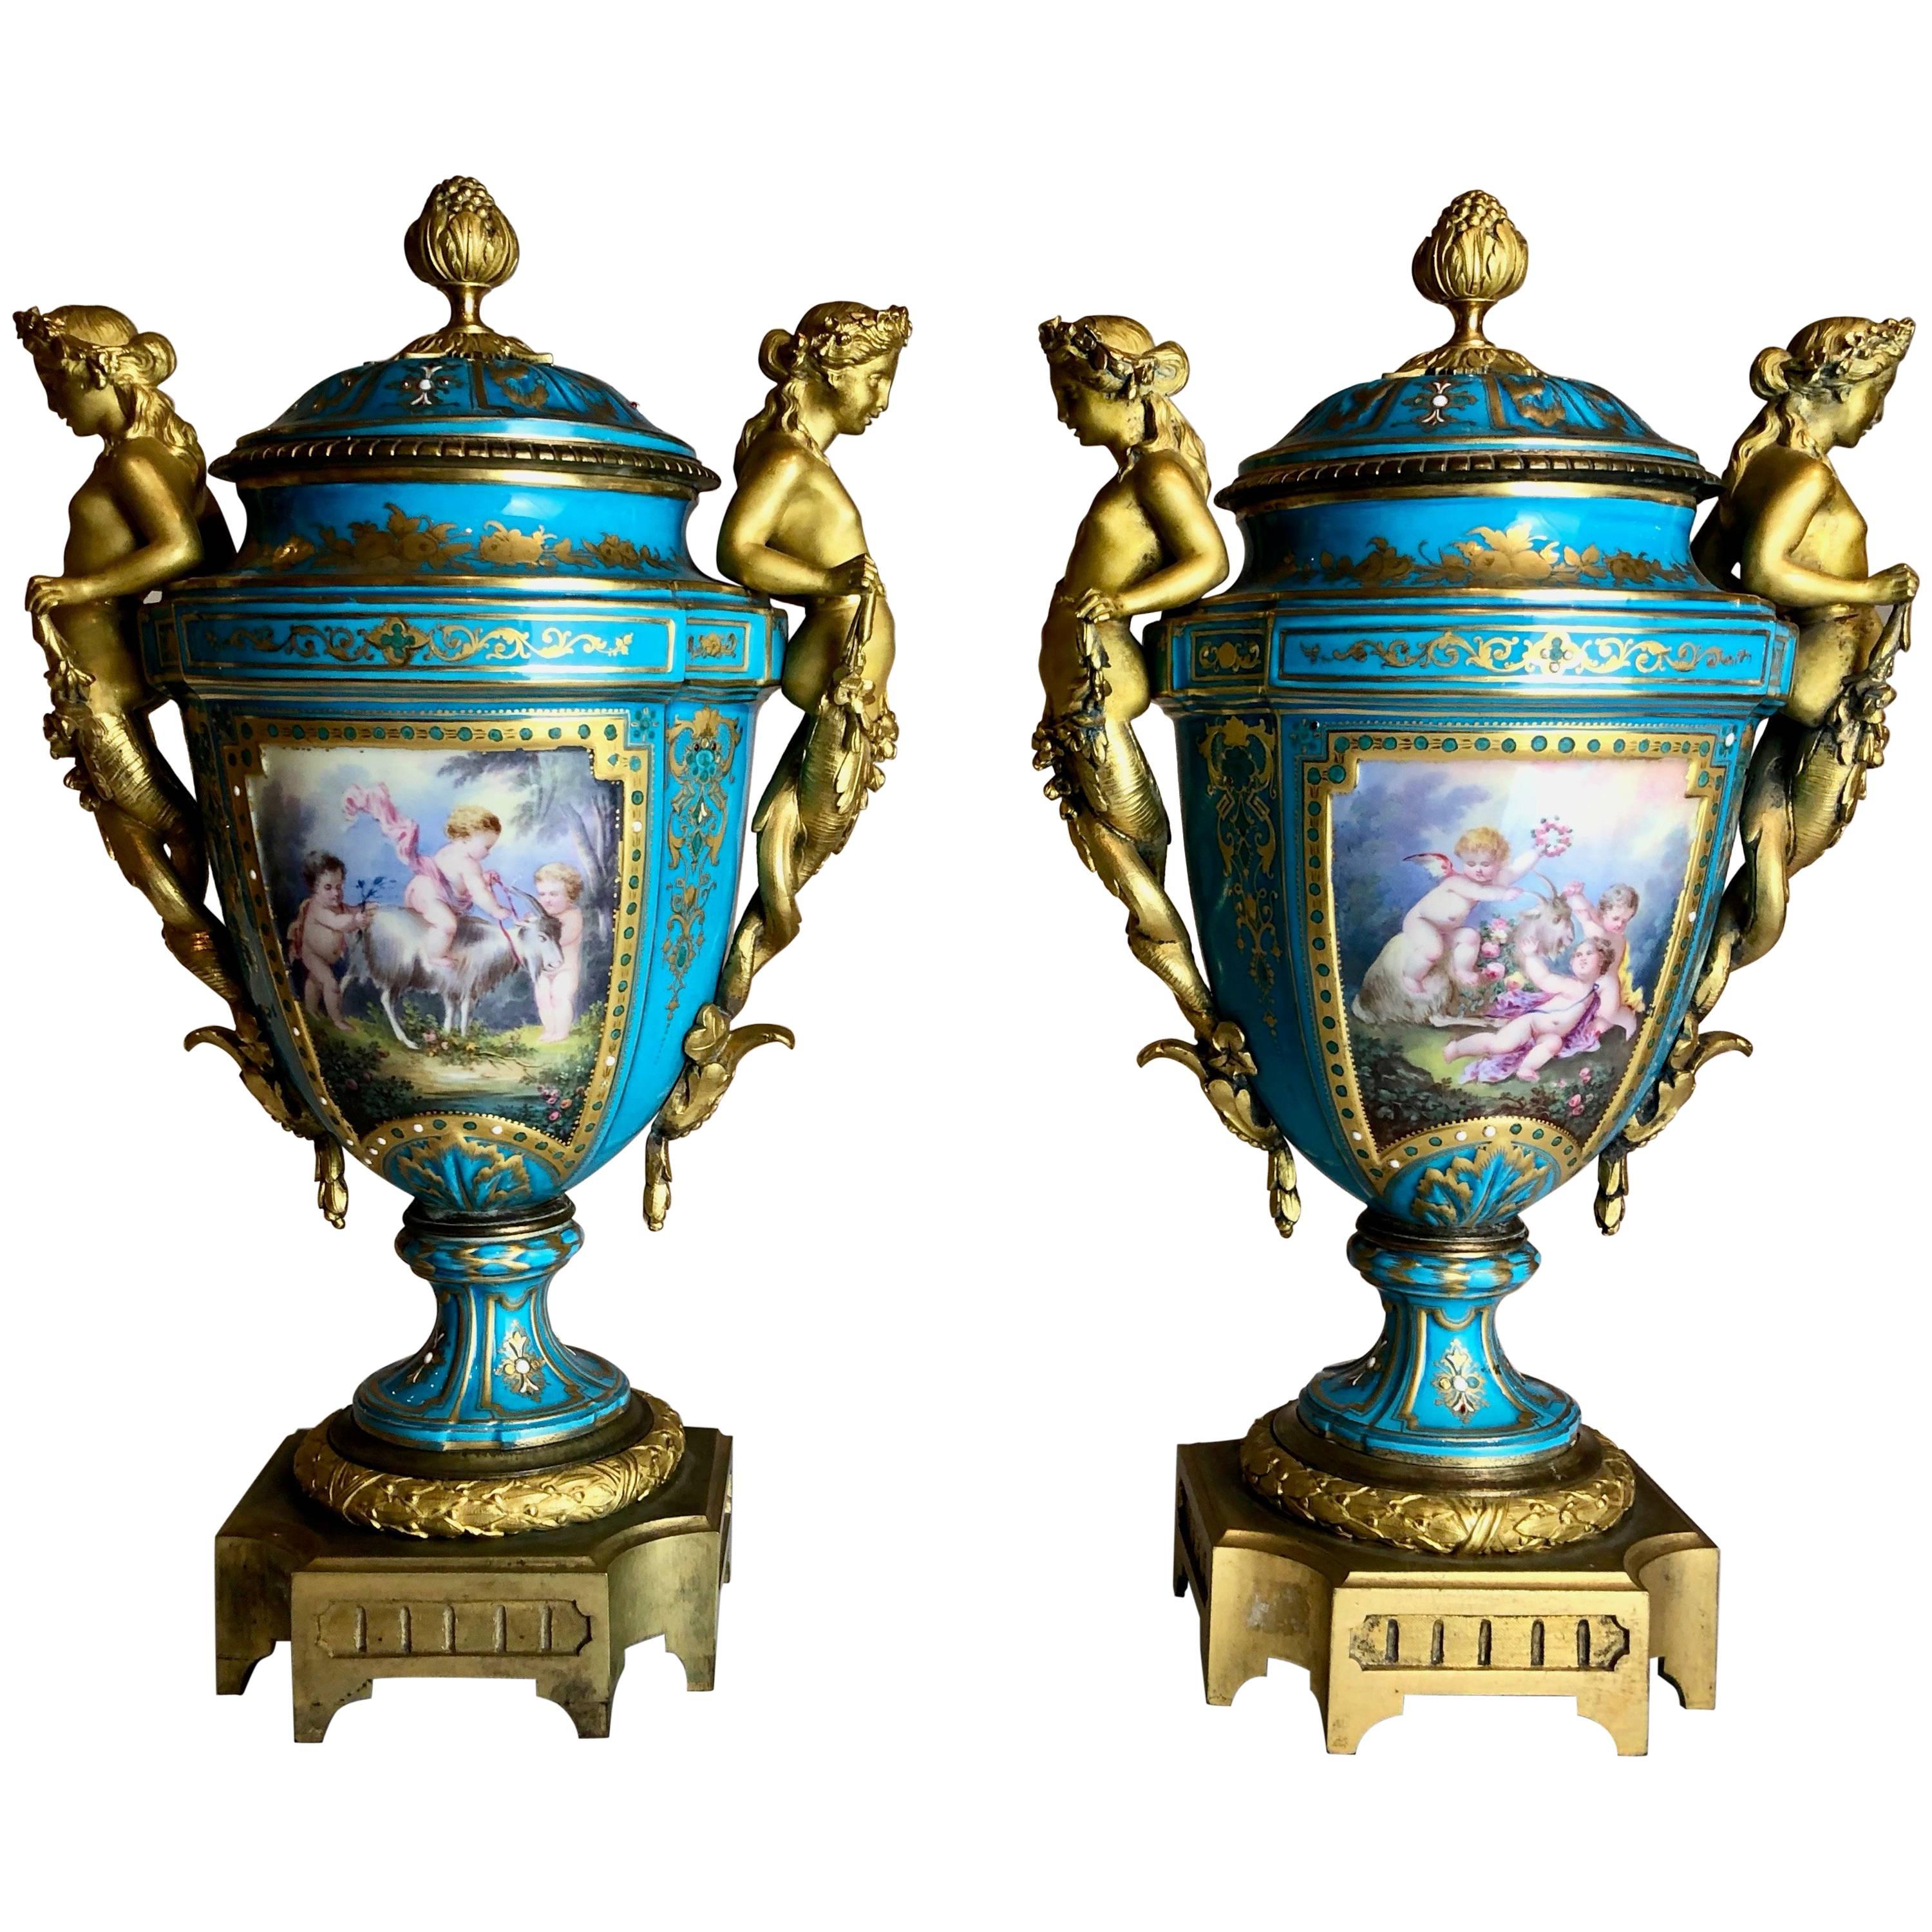 Antique Pair of Gilt Bronze-Mounted Sèvres Vase, French, circa 1870